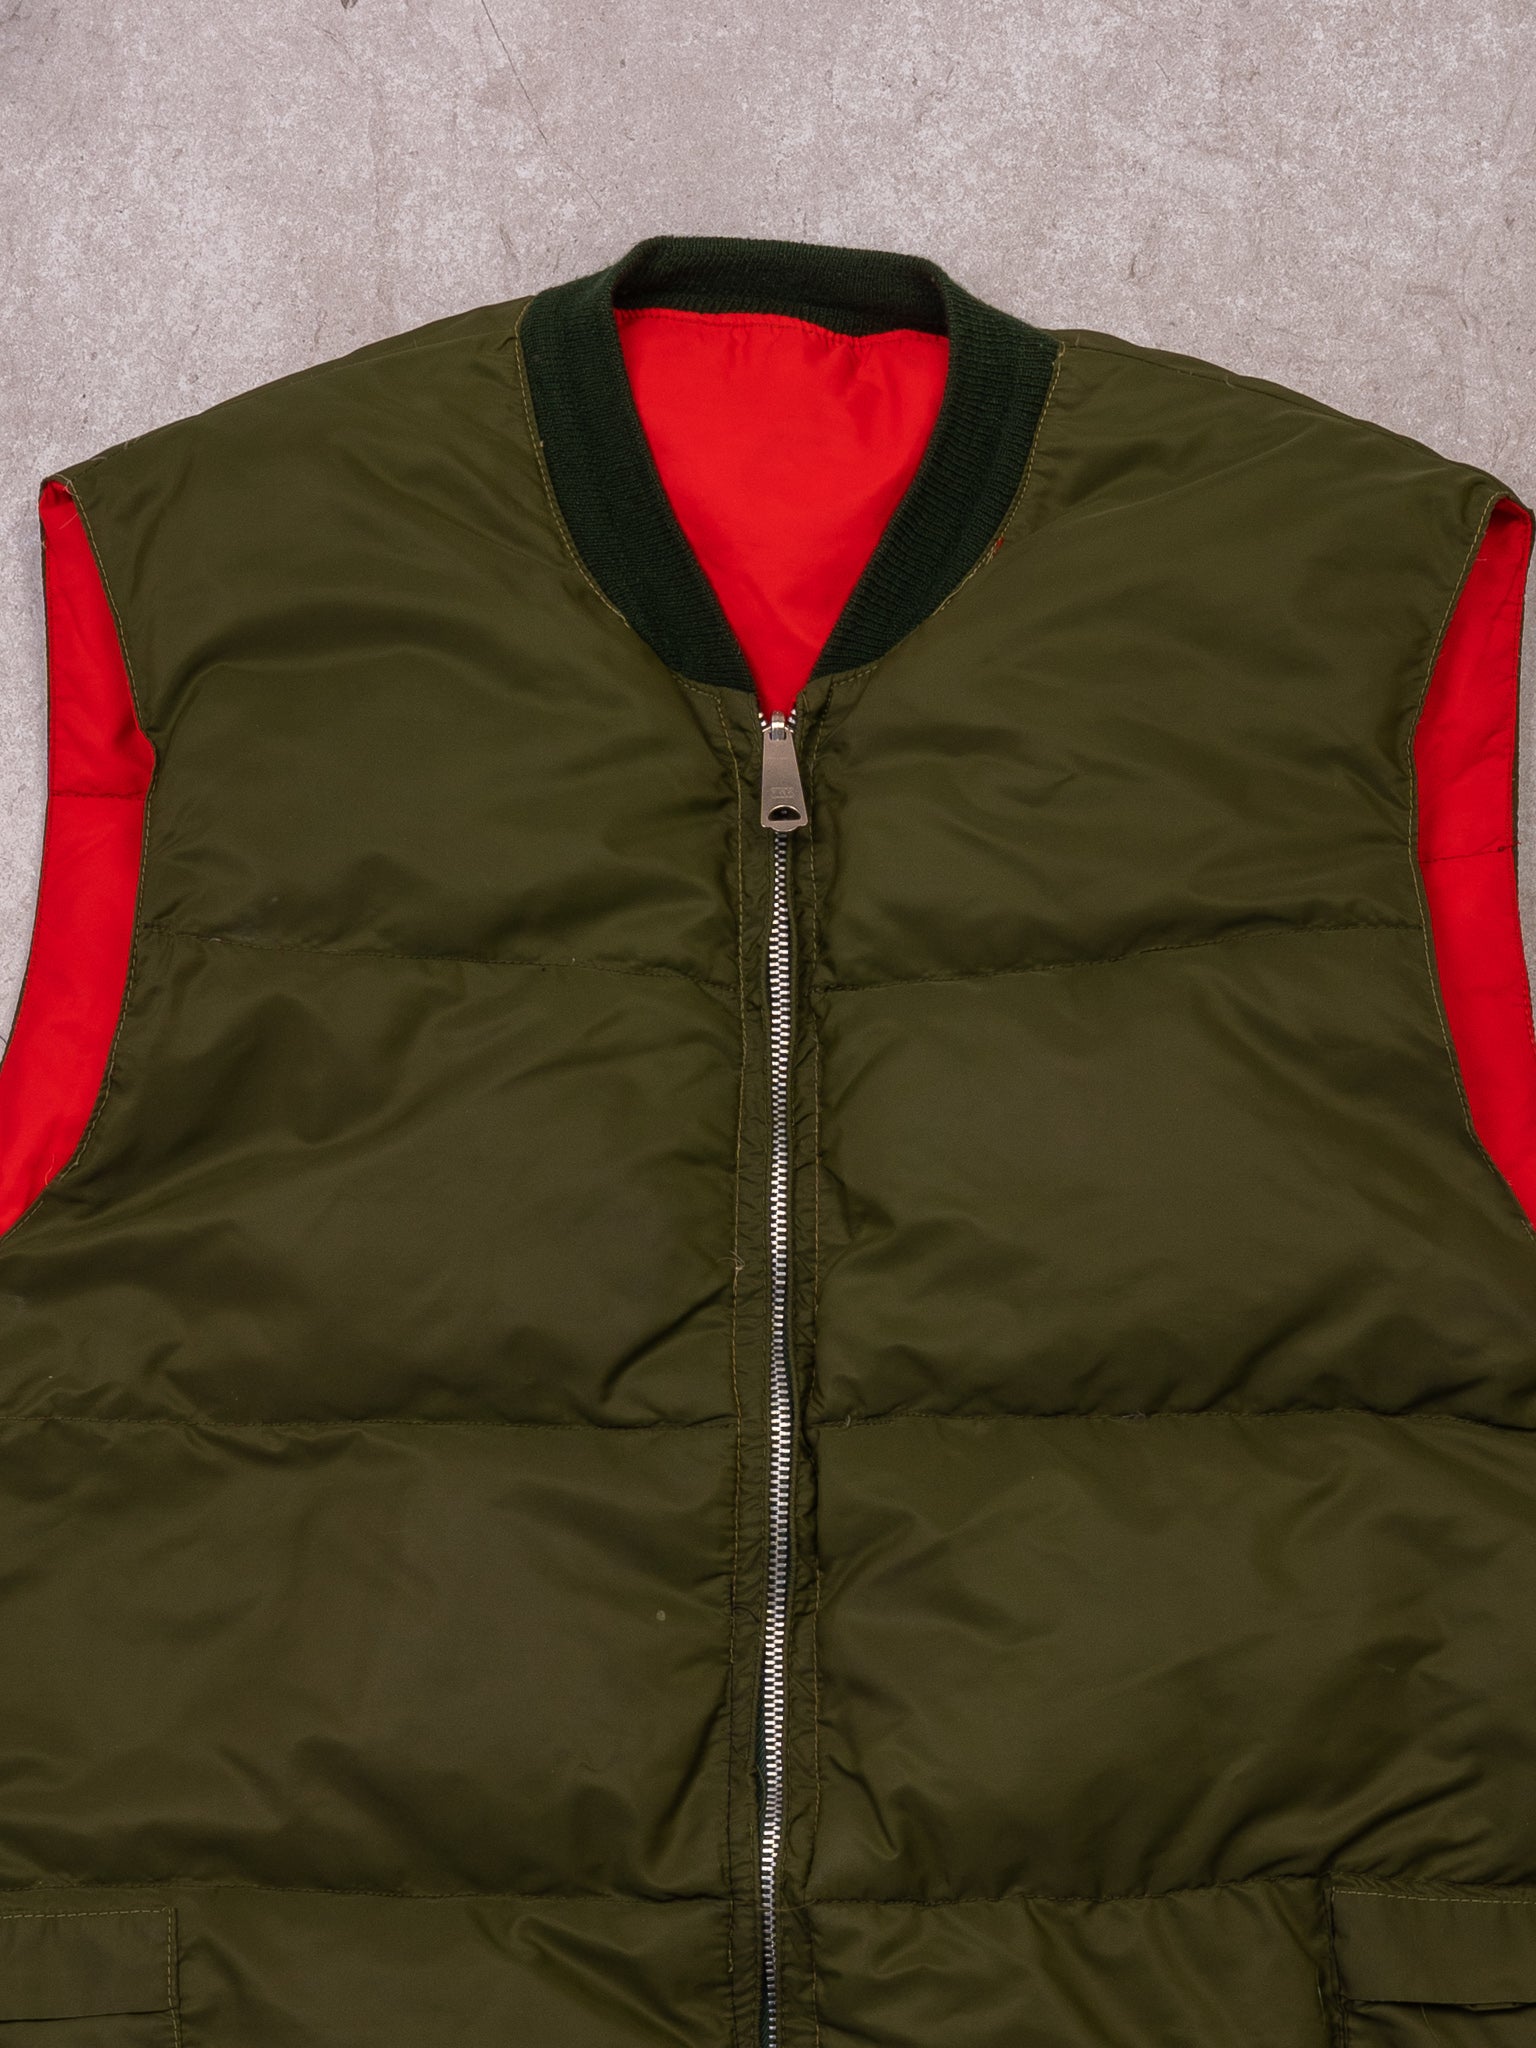 Vintage 80s Reversible Green + Red Puffer Vest (M/L)